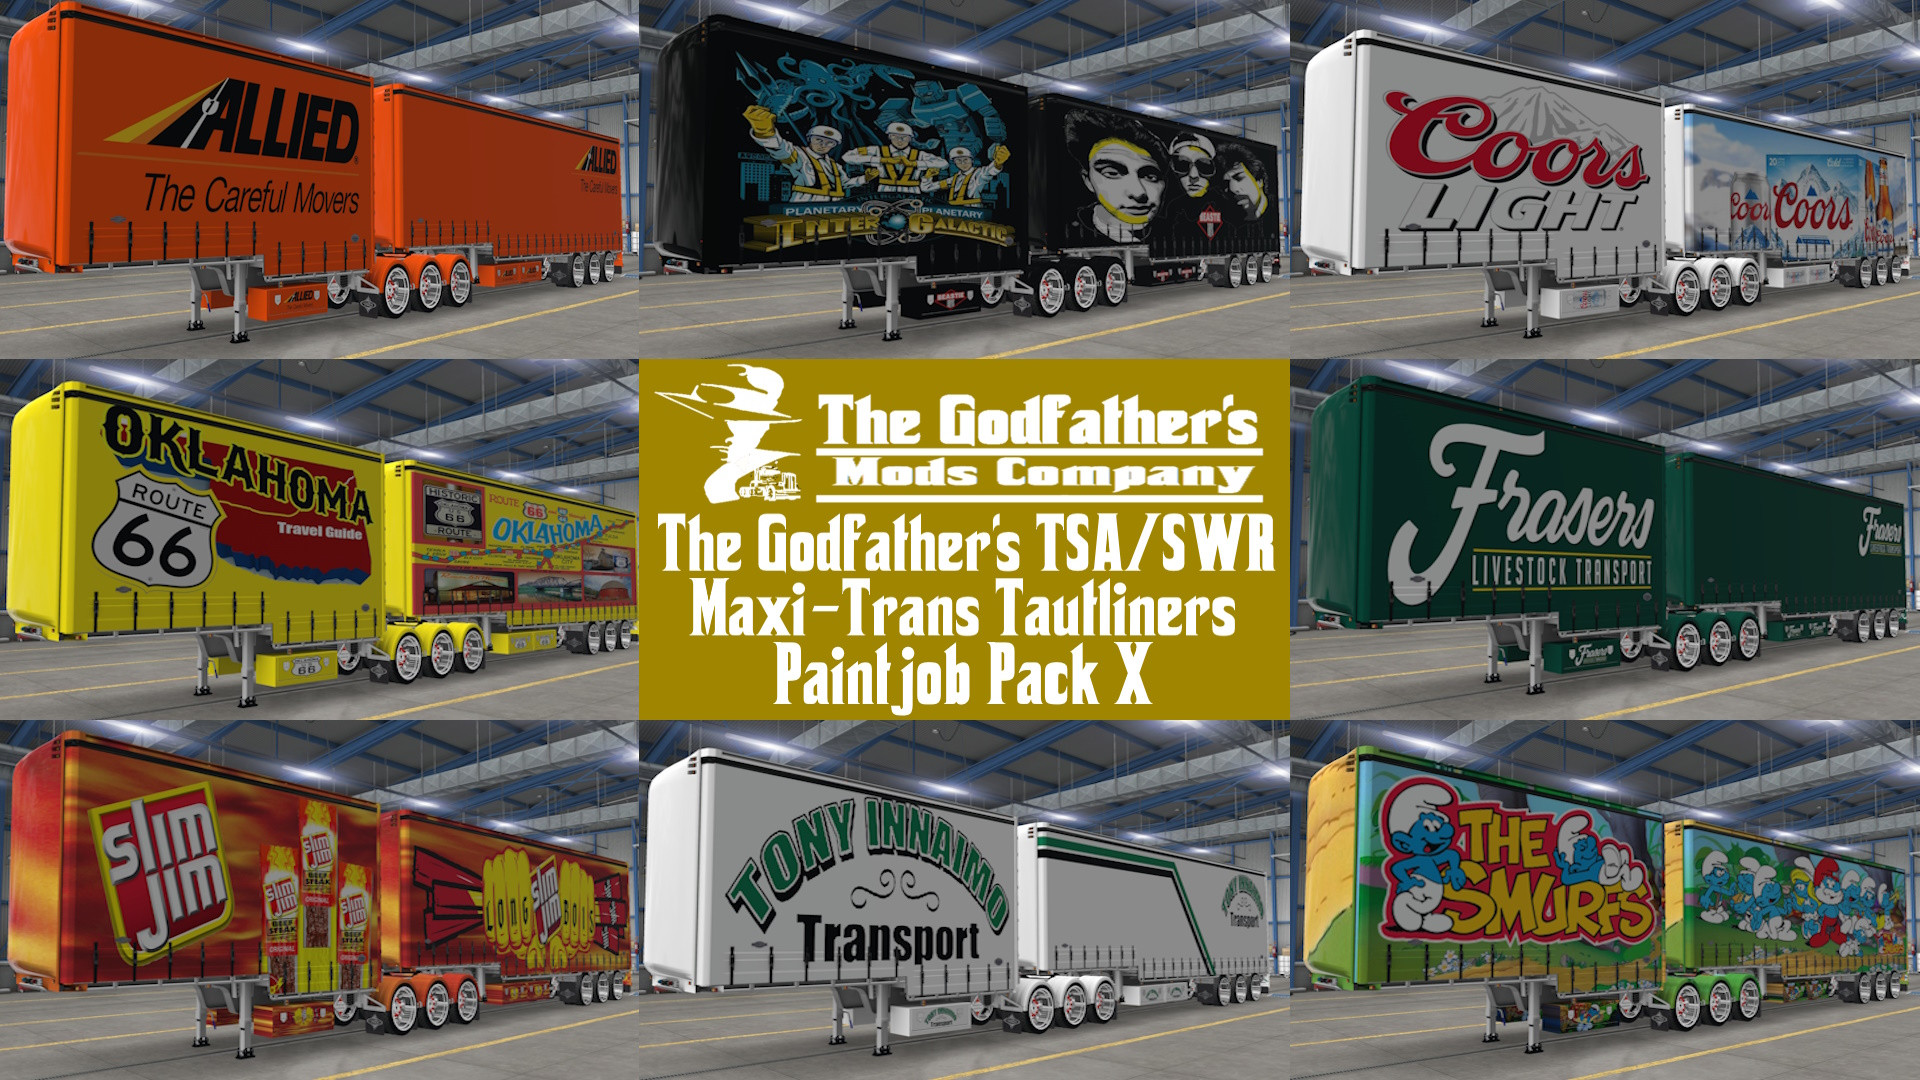 The Godfather's TSA/SWR Maxi-Trans Tautliners Paintjob Pack X